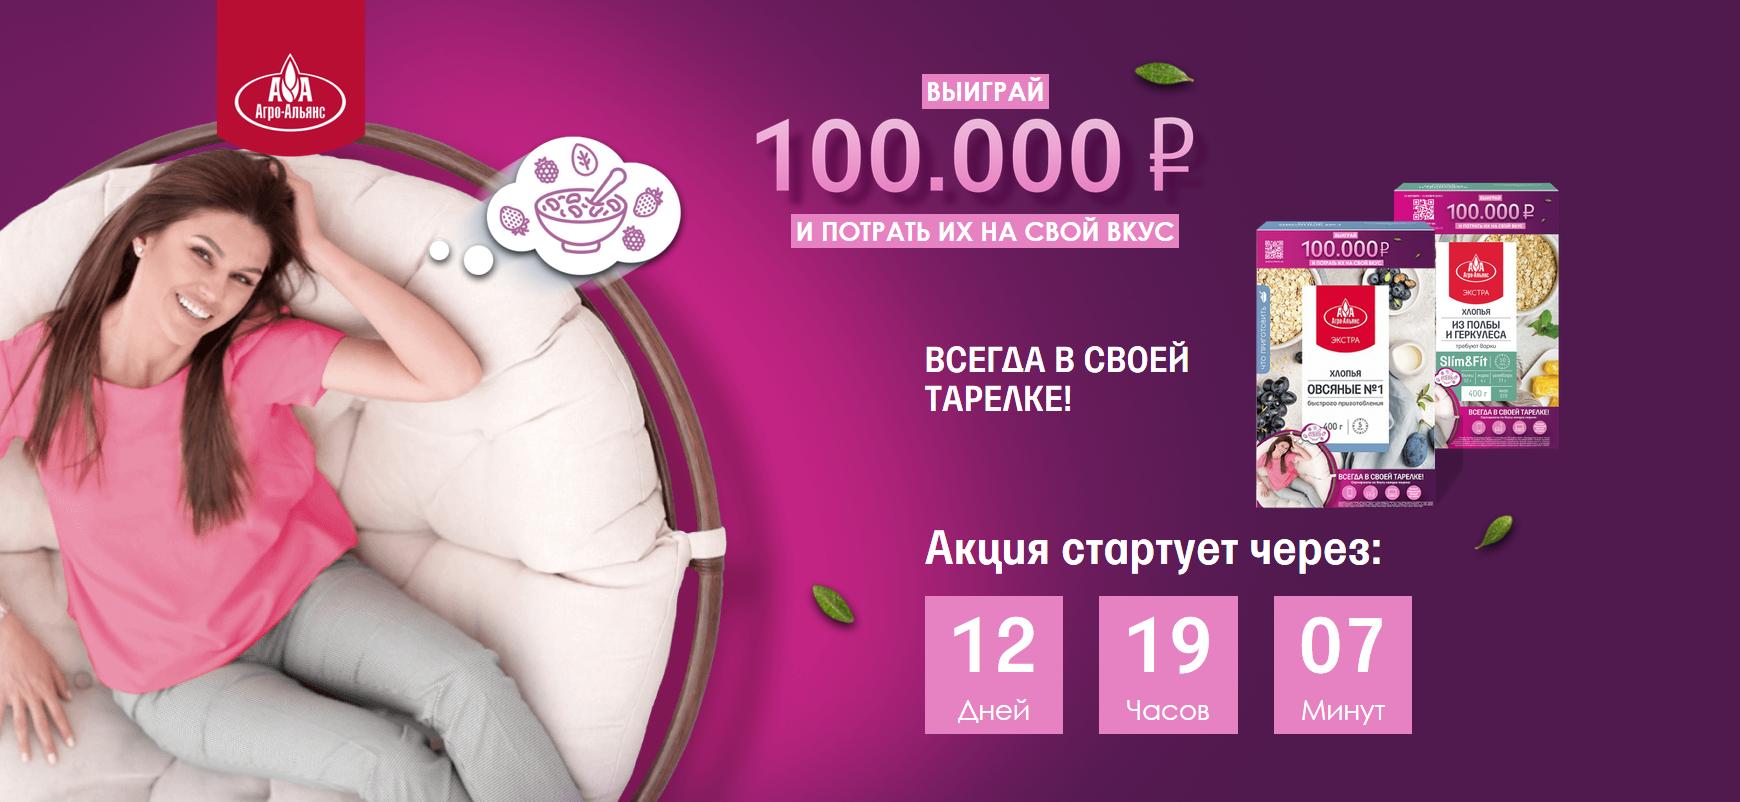 www.promo.mir-krup.ru  